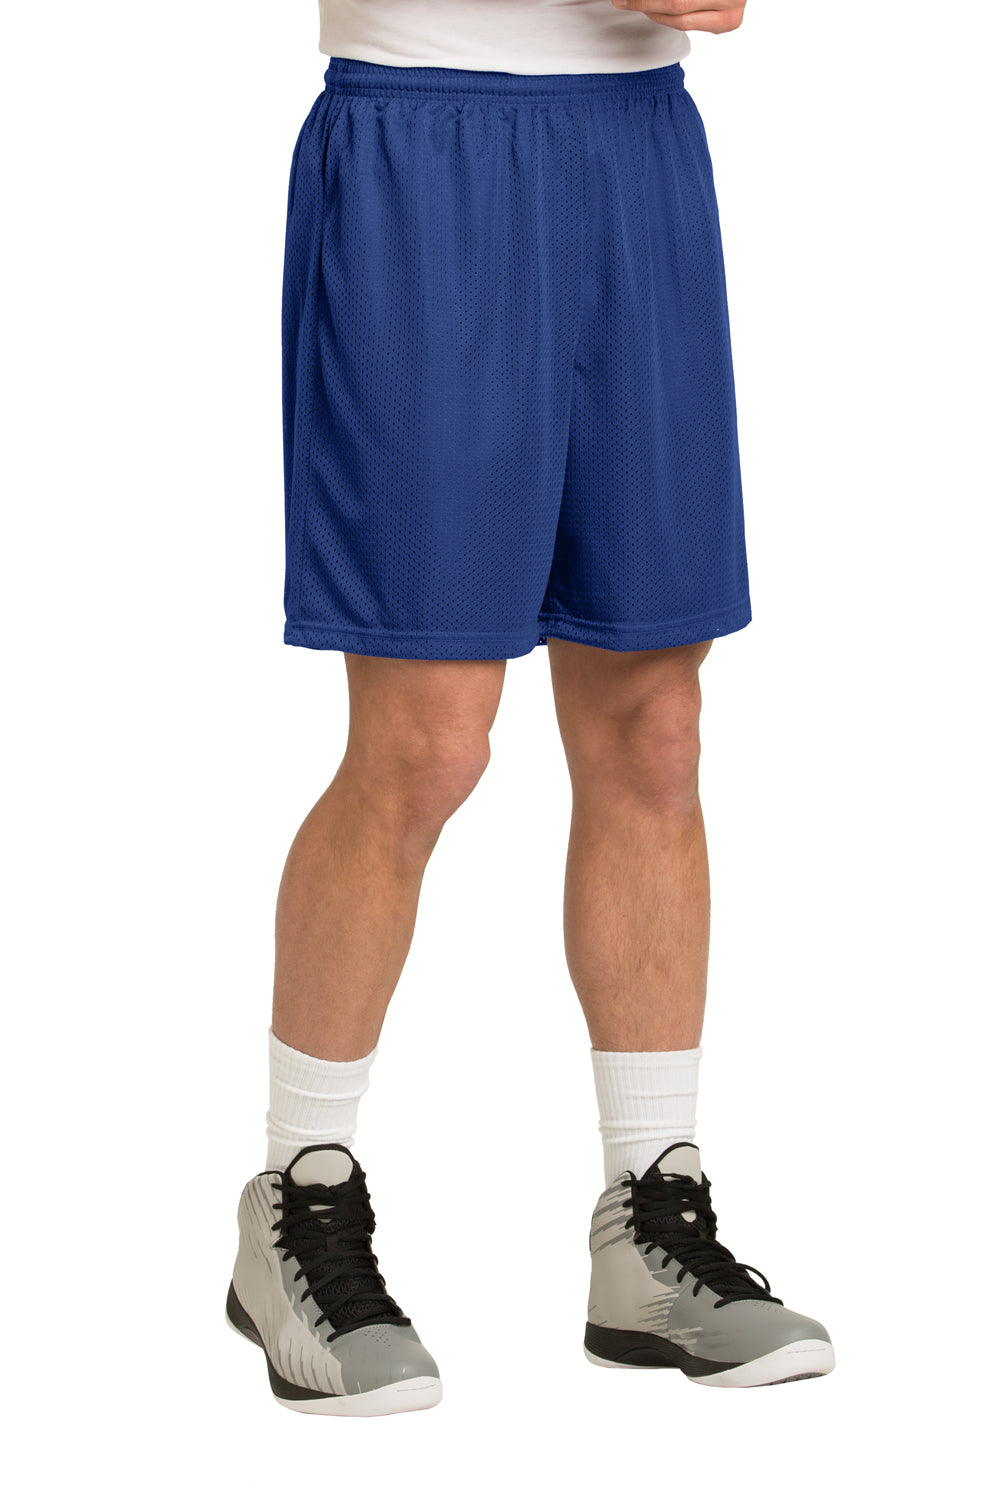 Sport-Tek ST510 PosiCharge Classic Mesh Shorts True Royal Blue 3Q